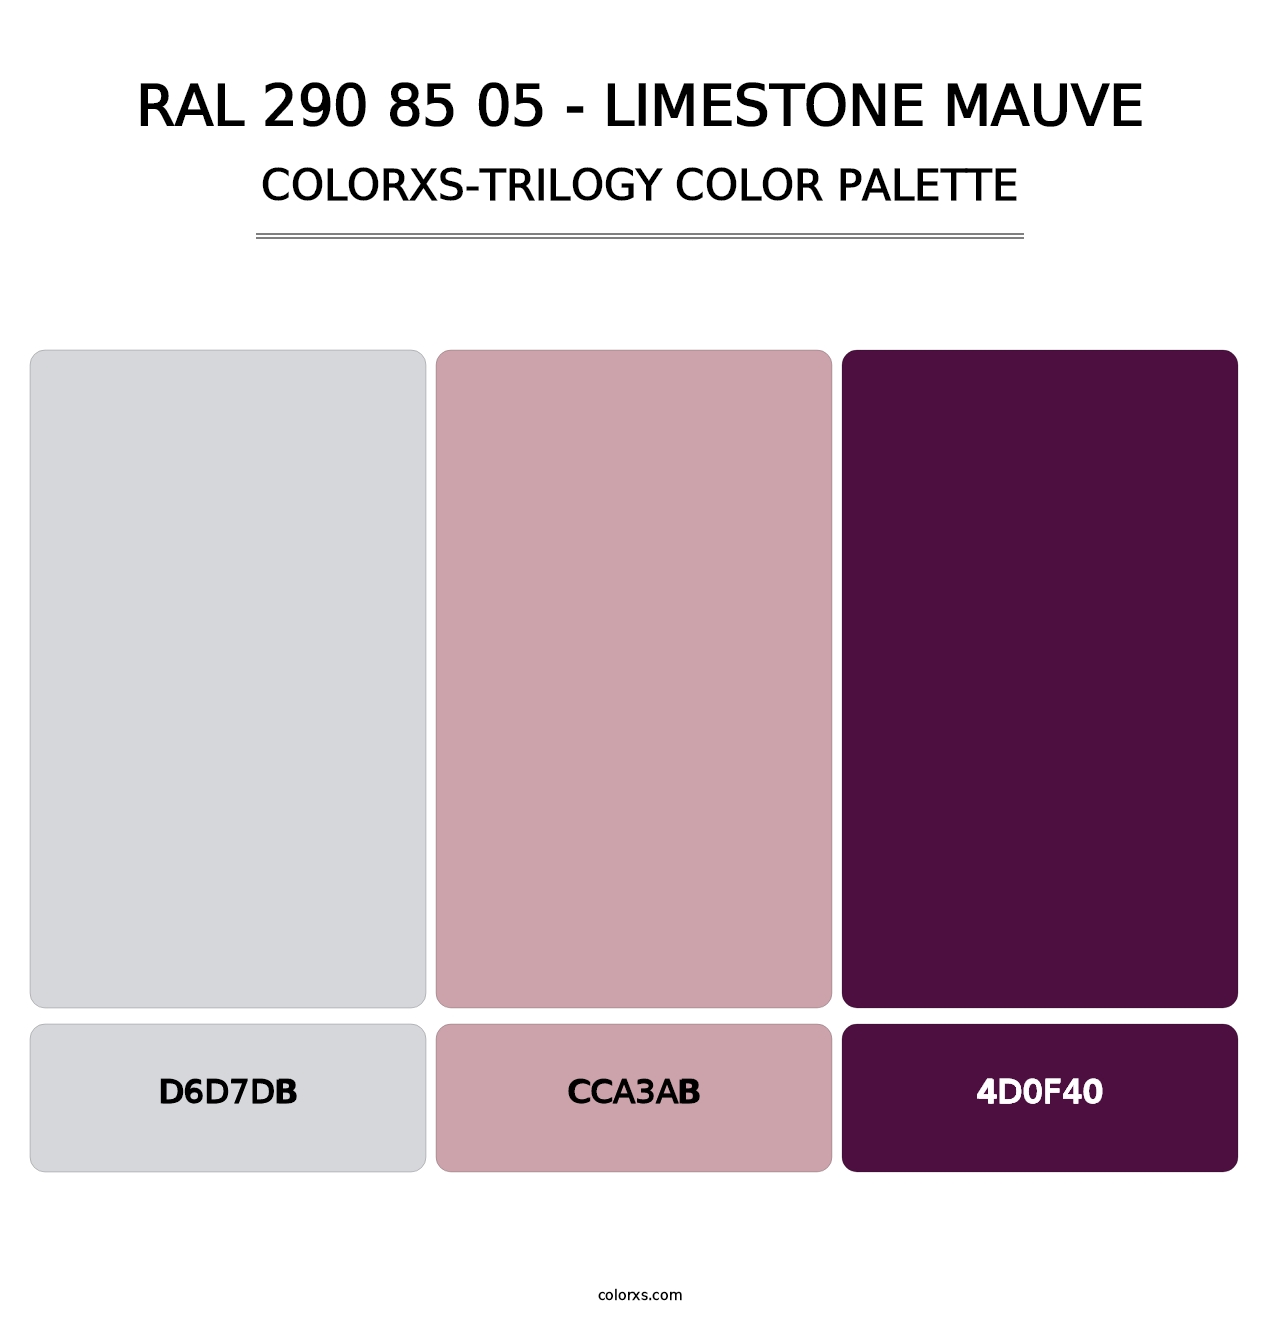 RAL 290 85 05 - Limestone Mauve - Colorxs Trilogy Palette